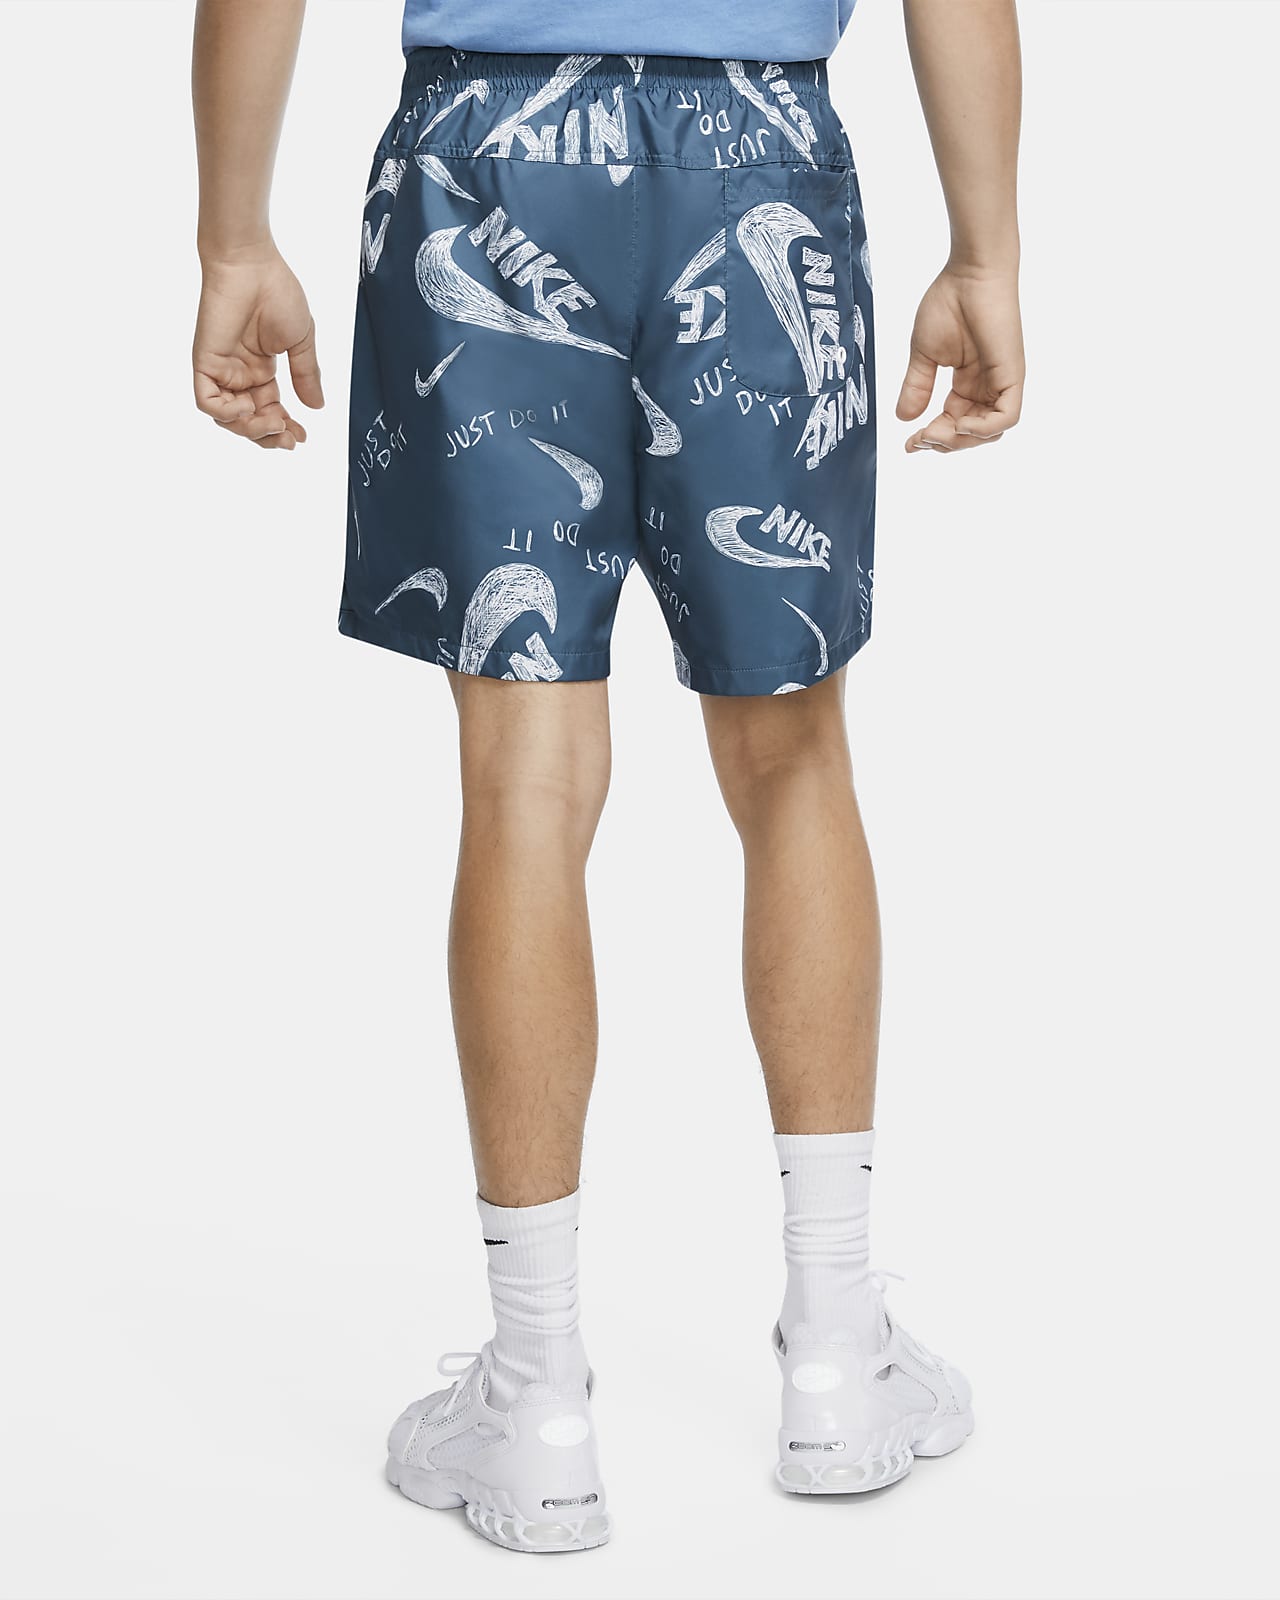 Nike Sportswear Men's Print Shorts. Nike.com